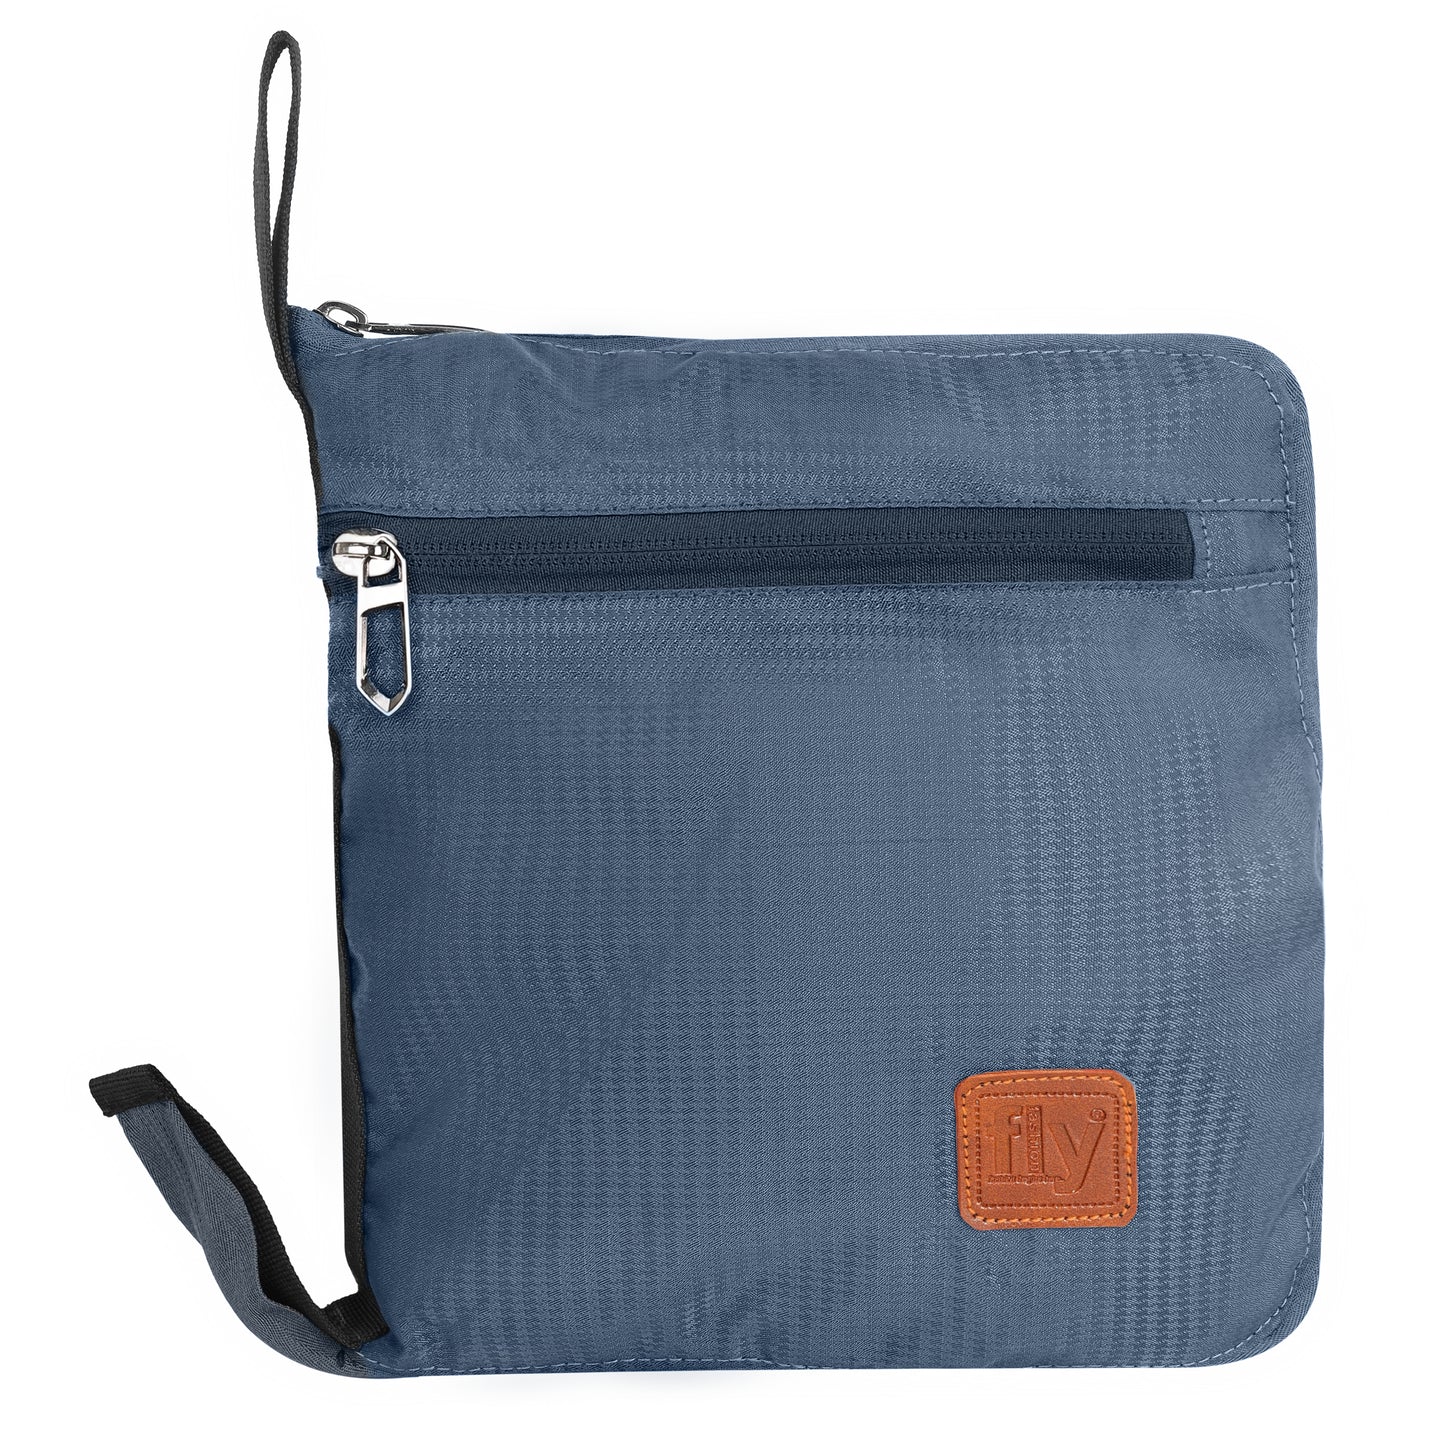 Fly Fashion Polyester Fold able Travel Duffel Bag Men Luggage Women -(Blue)